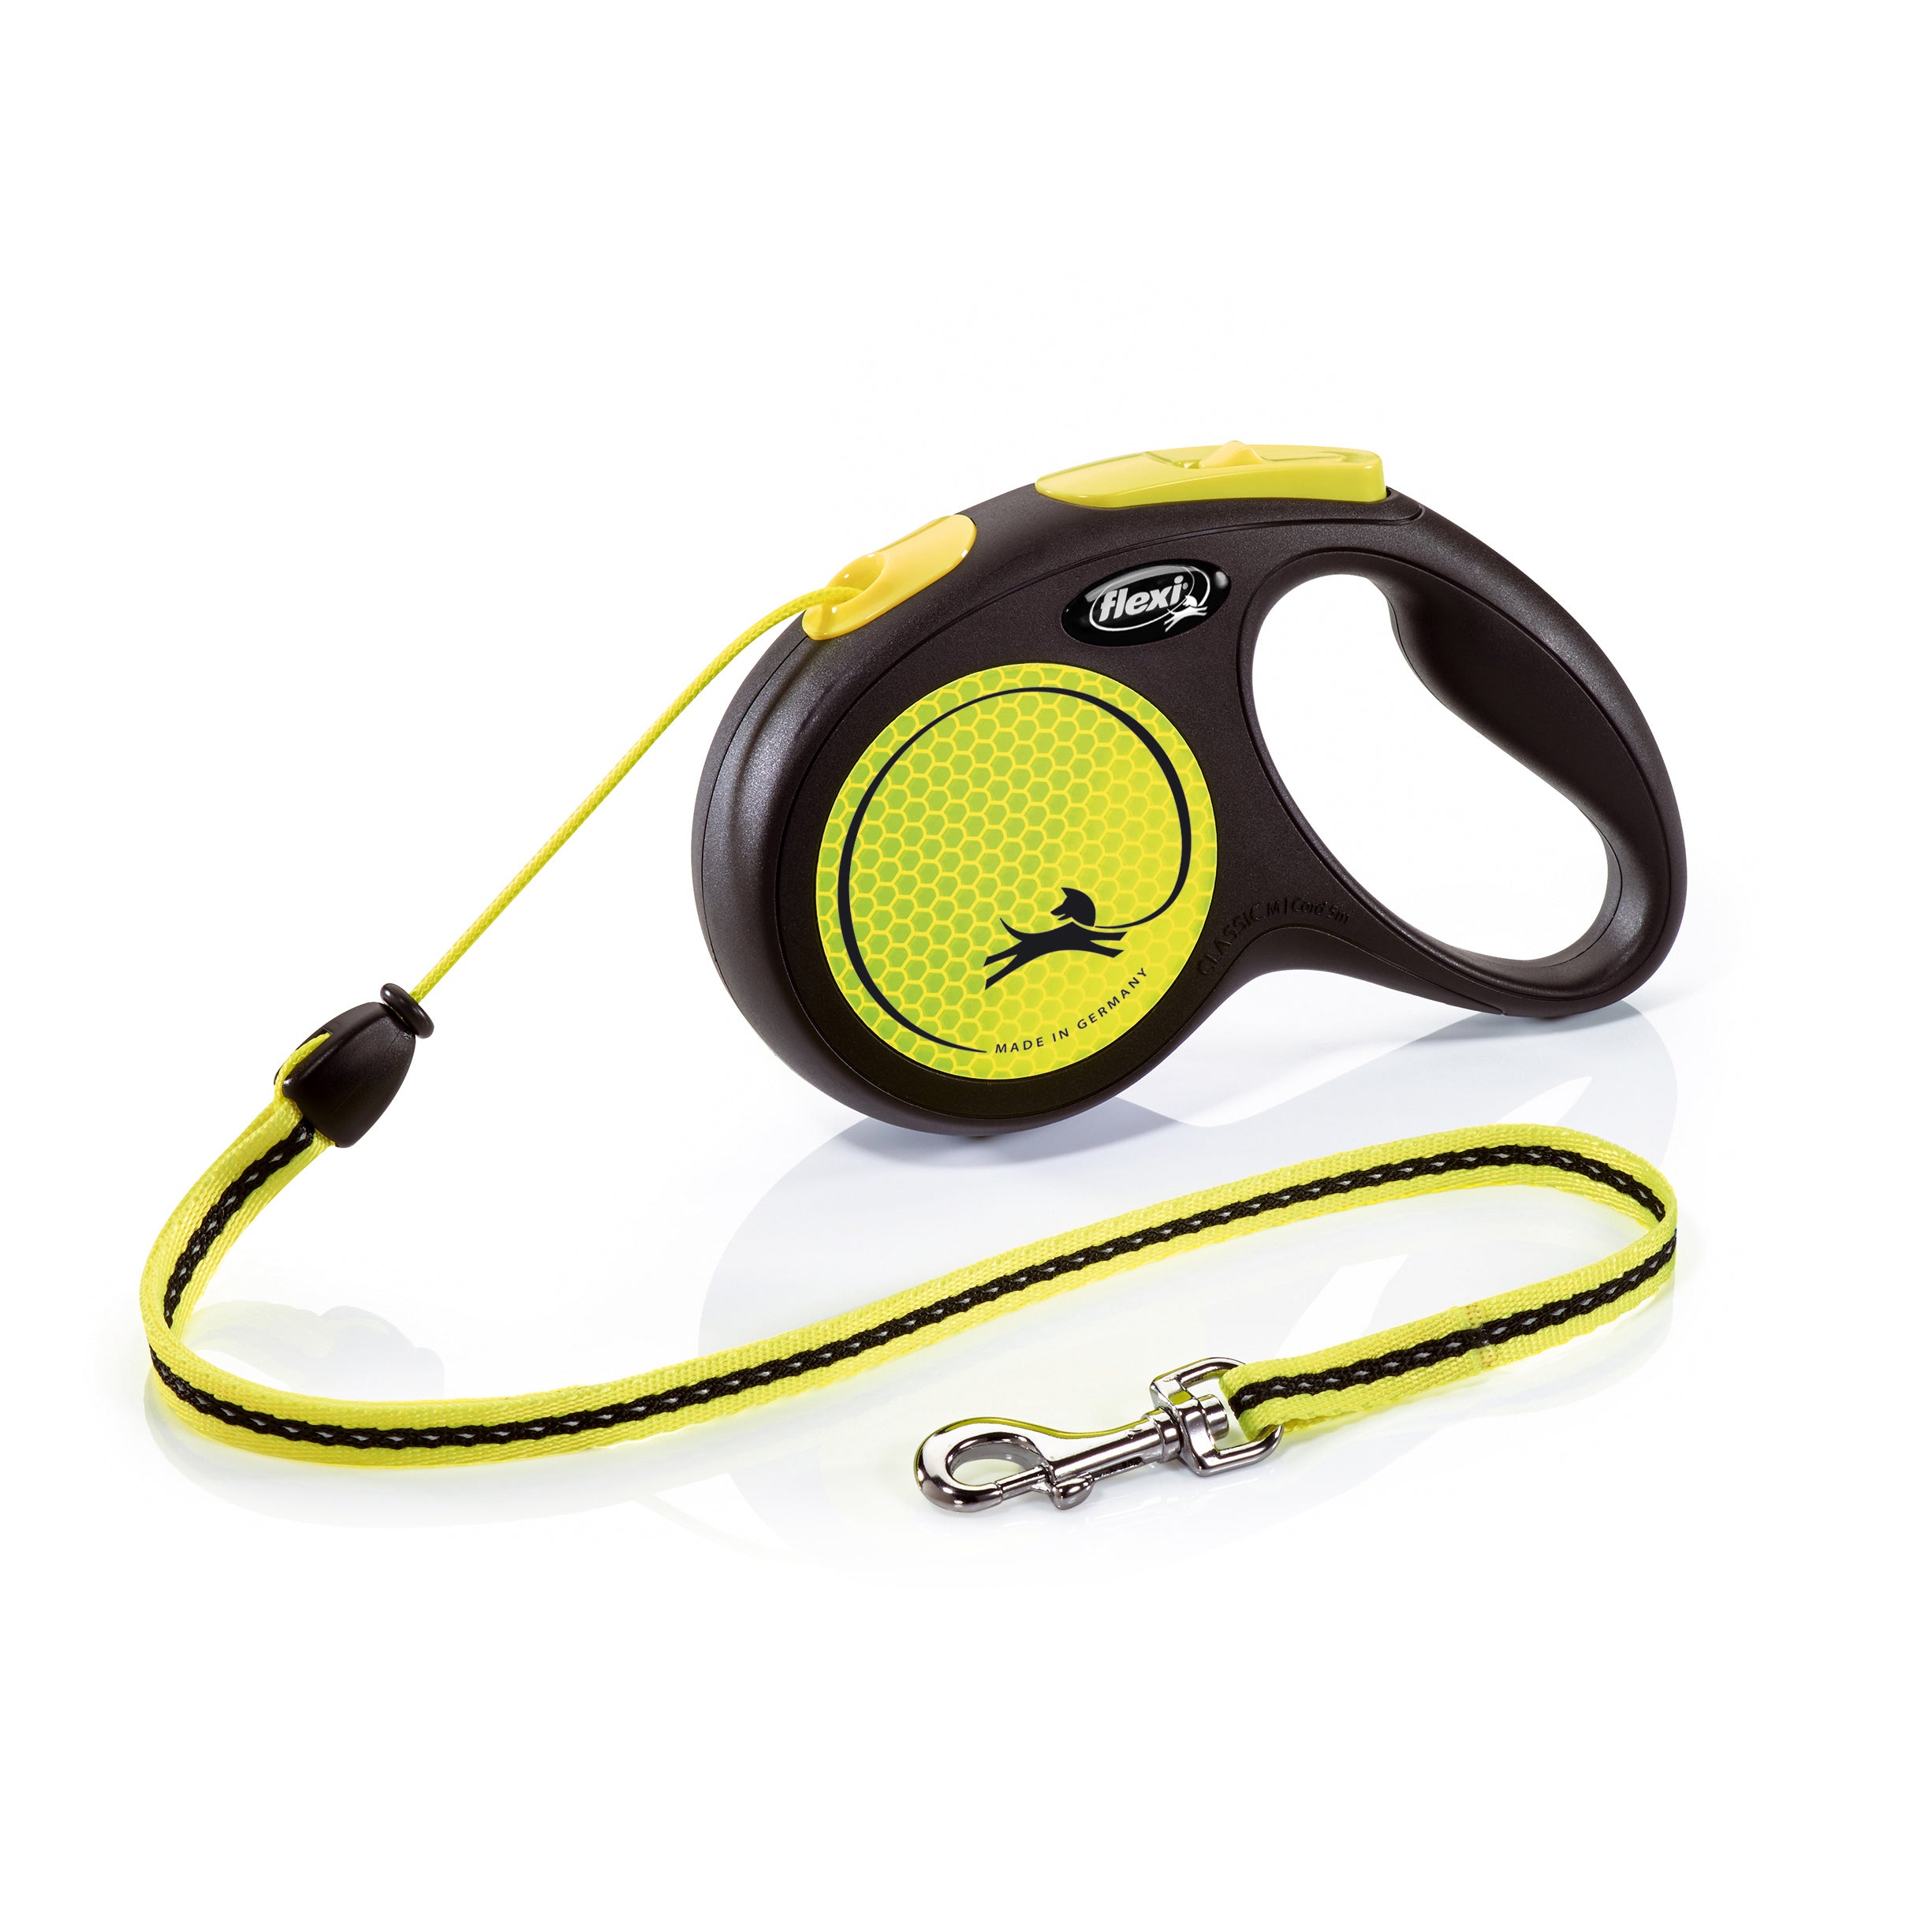 Image of Flexi Neon Retractable Dog Lead - Black/Yellow - Small Cord